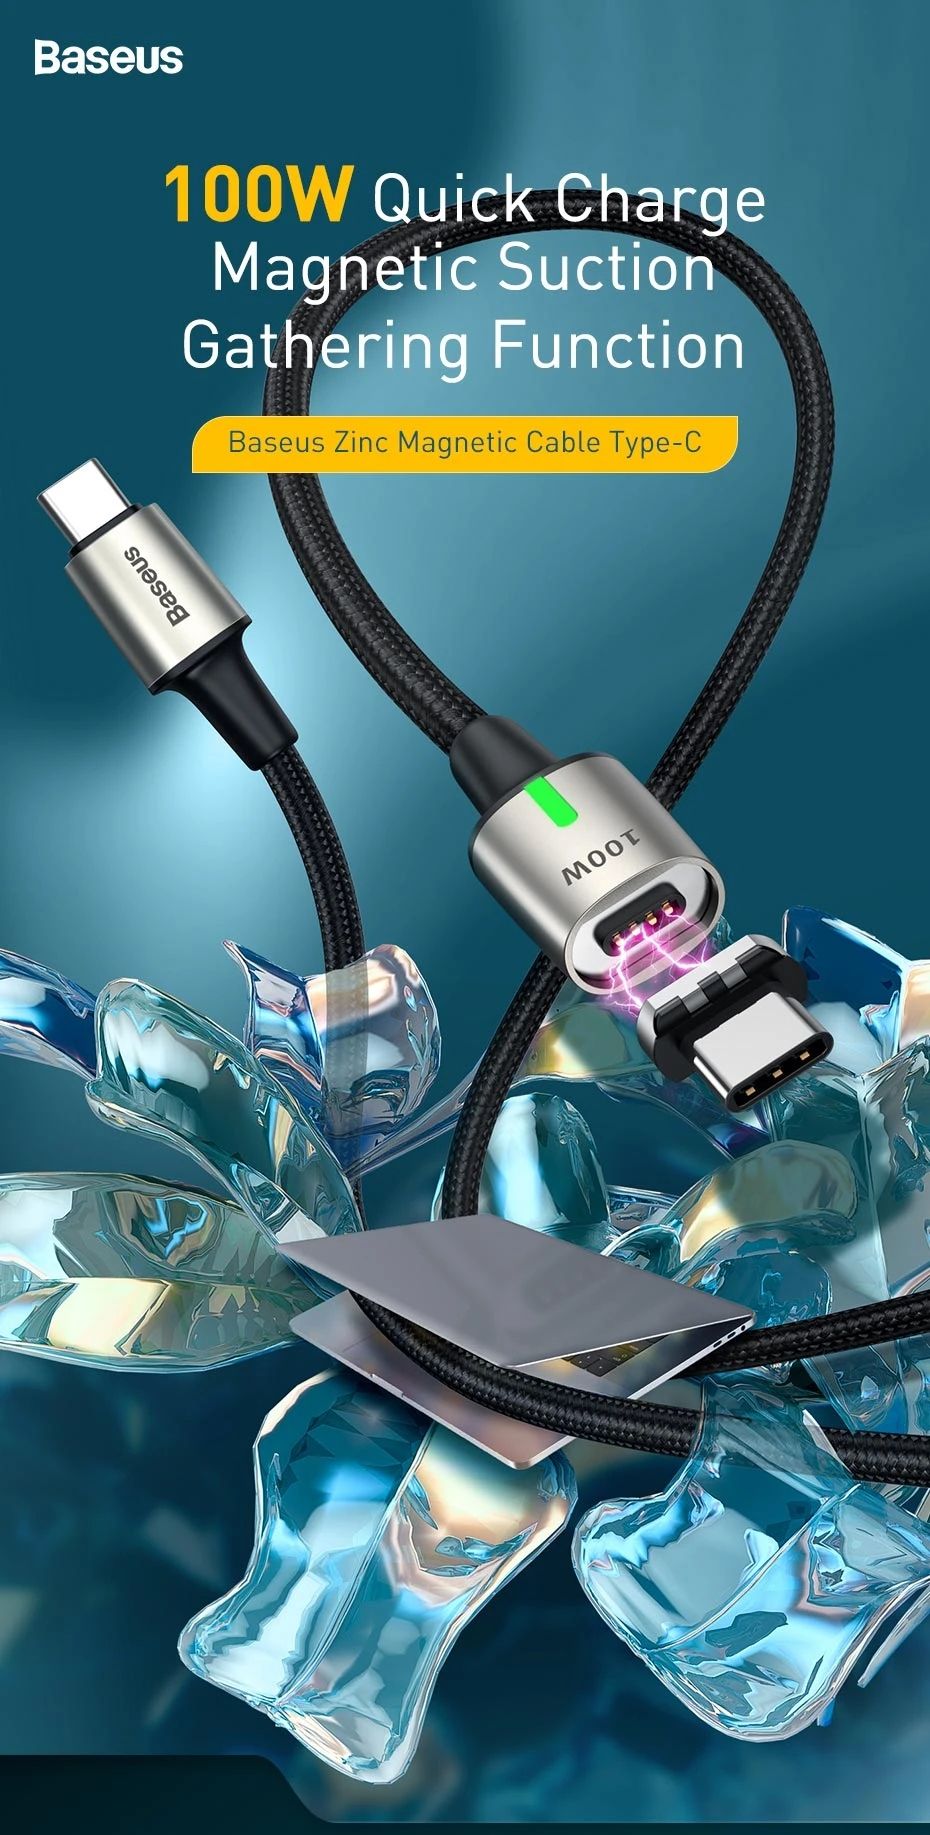 BlitzWolfreg-BW-S16-75W-6-Port-USB-PD-Charger-Desktop-Charging-Station-Dual-PD30-QC30-With-Baseus-10-1733116